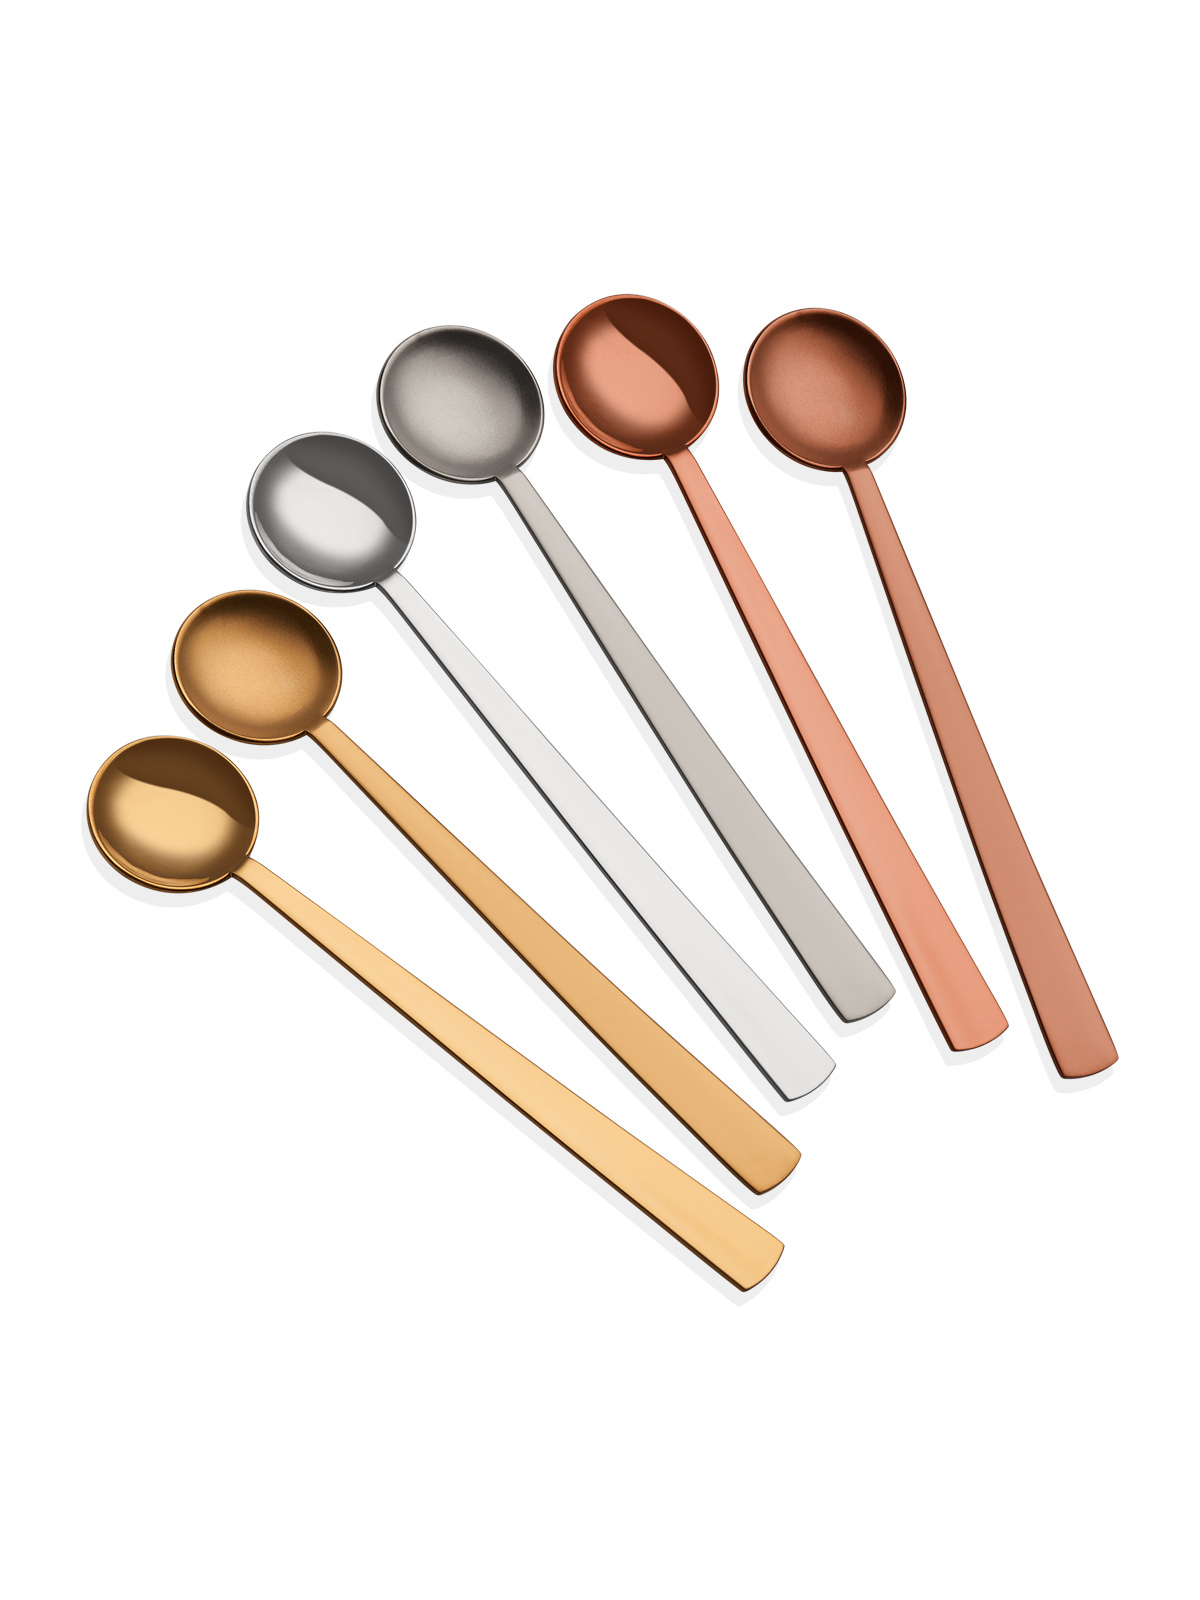 Bosfor Tea Spoon - Colored - 6 Pieces Set